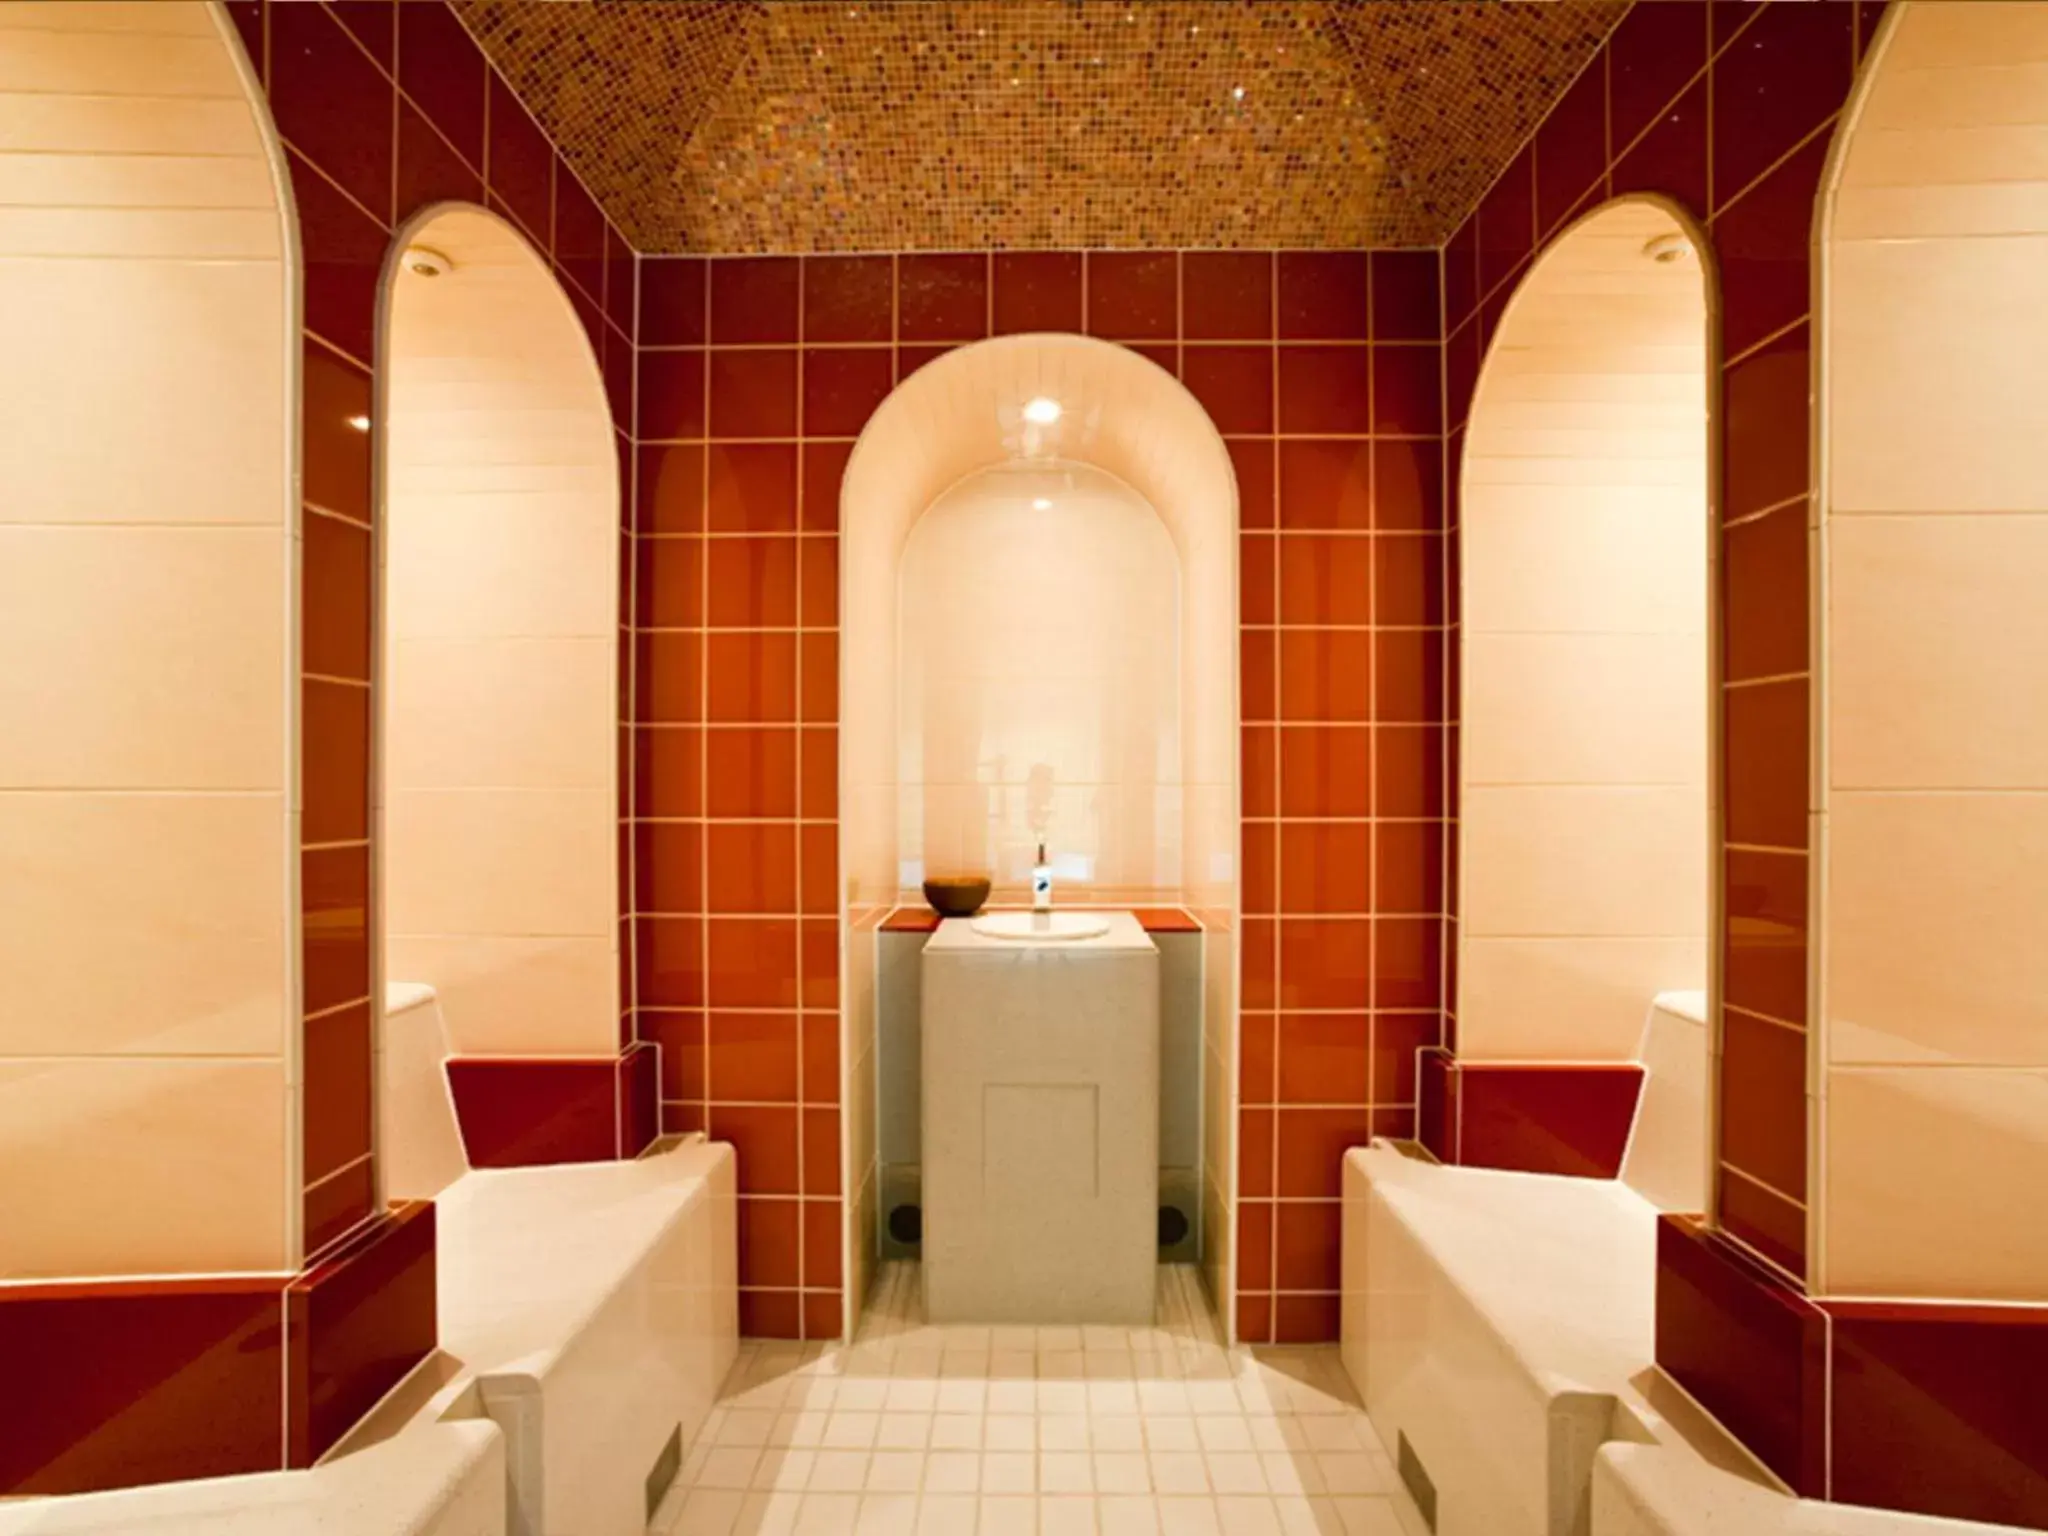 Steam room, Bathroom in Hotel Birke, Ringhotel Kiel